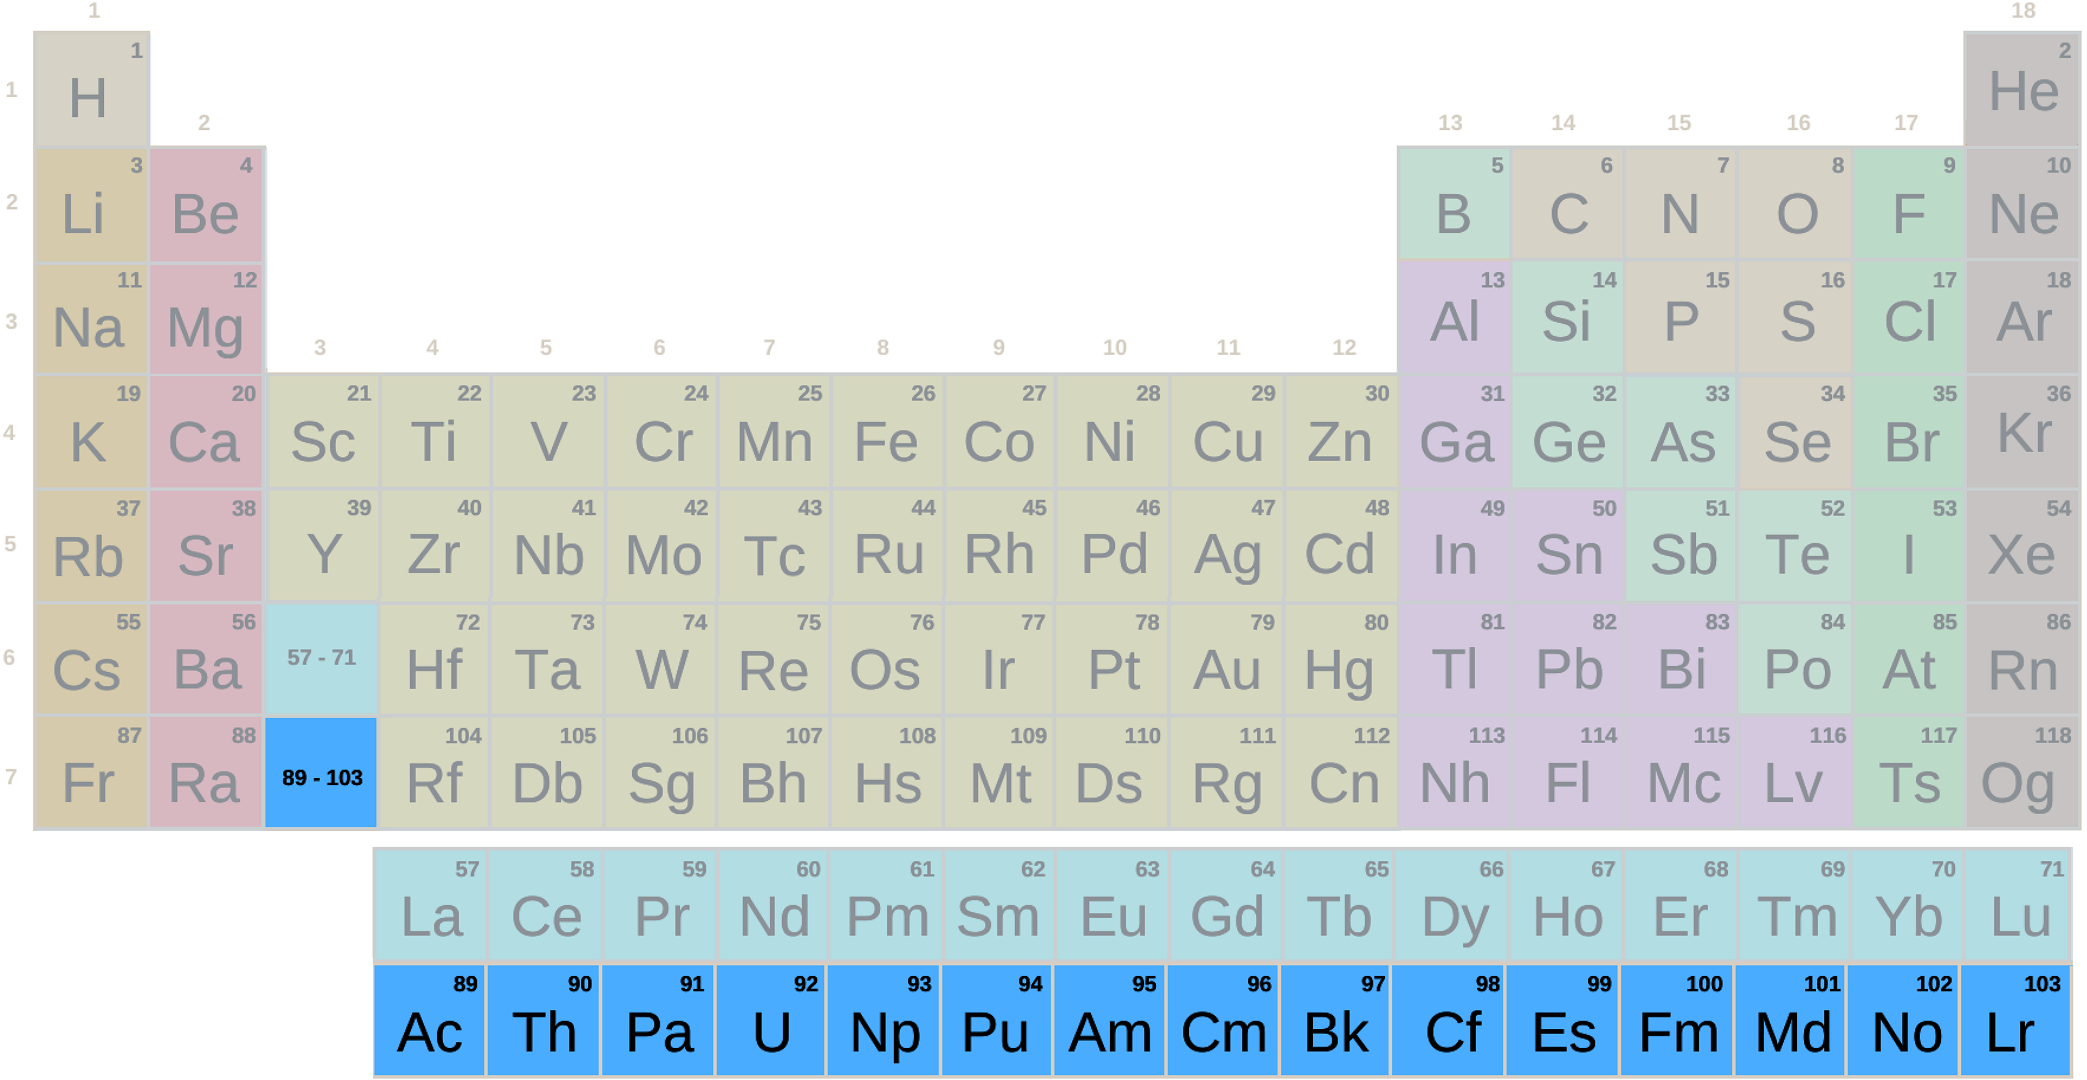 Tabela periódica, grupo actinídeo com símbolos (difícil)